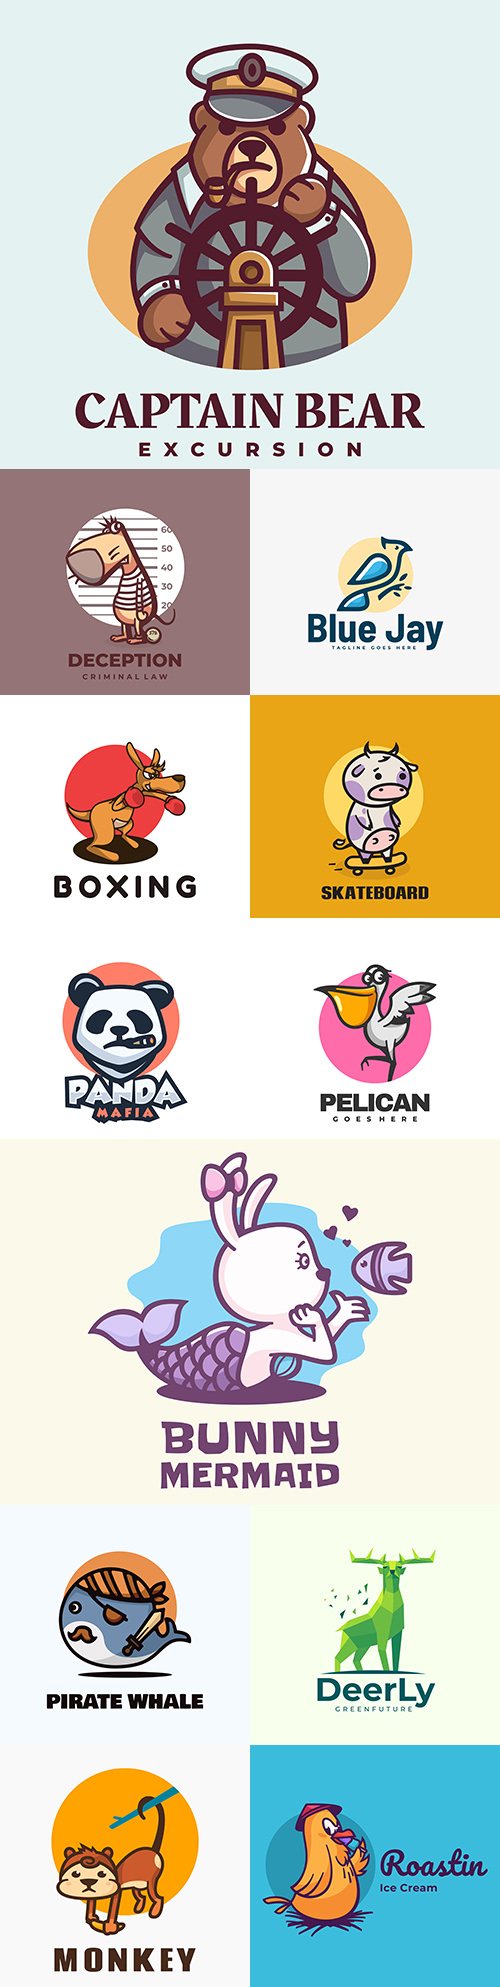 Mascot emblem and brand name logos design 4
